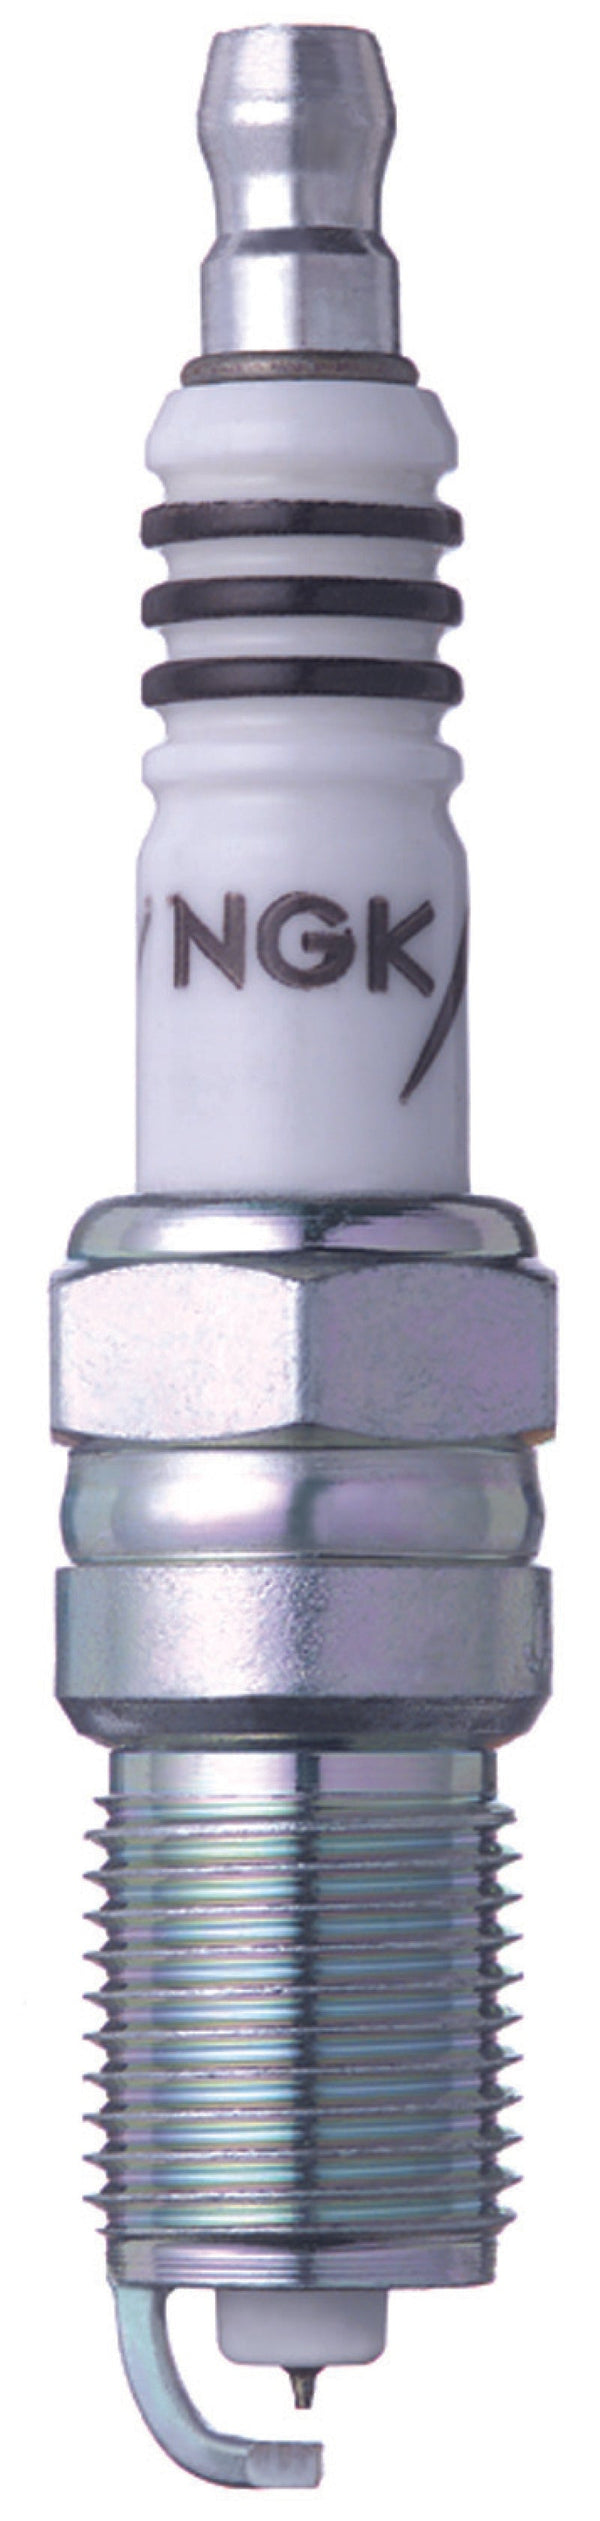 NGK IX Iridium Spark Plug Box of 4 (TR55IX) - Premium Spark Plugs from NGK - Just 126.81 SR! Shop now at Motors